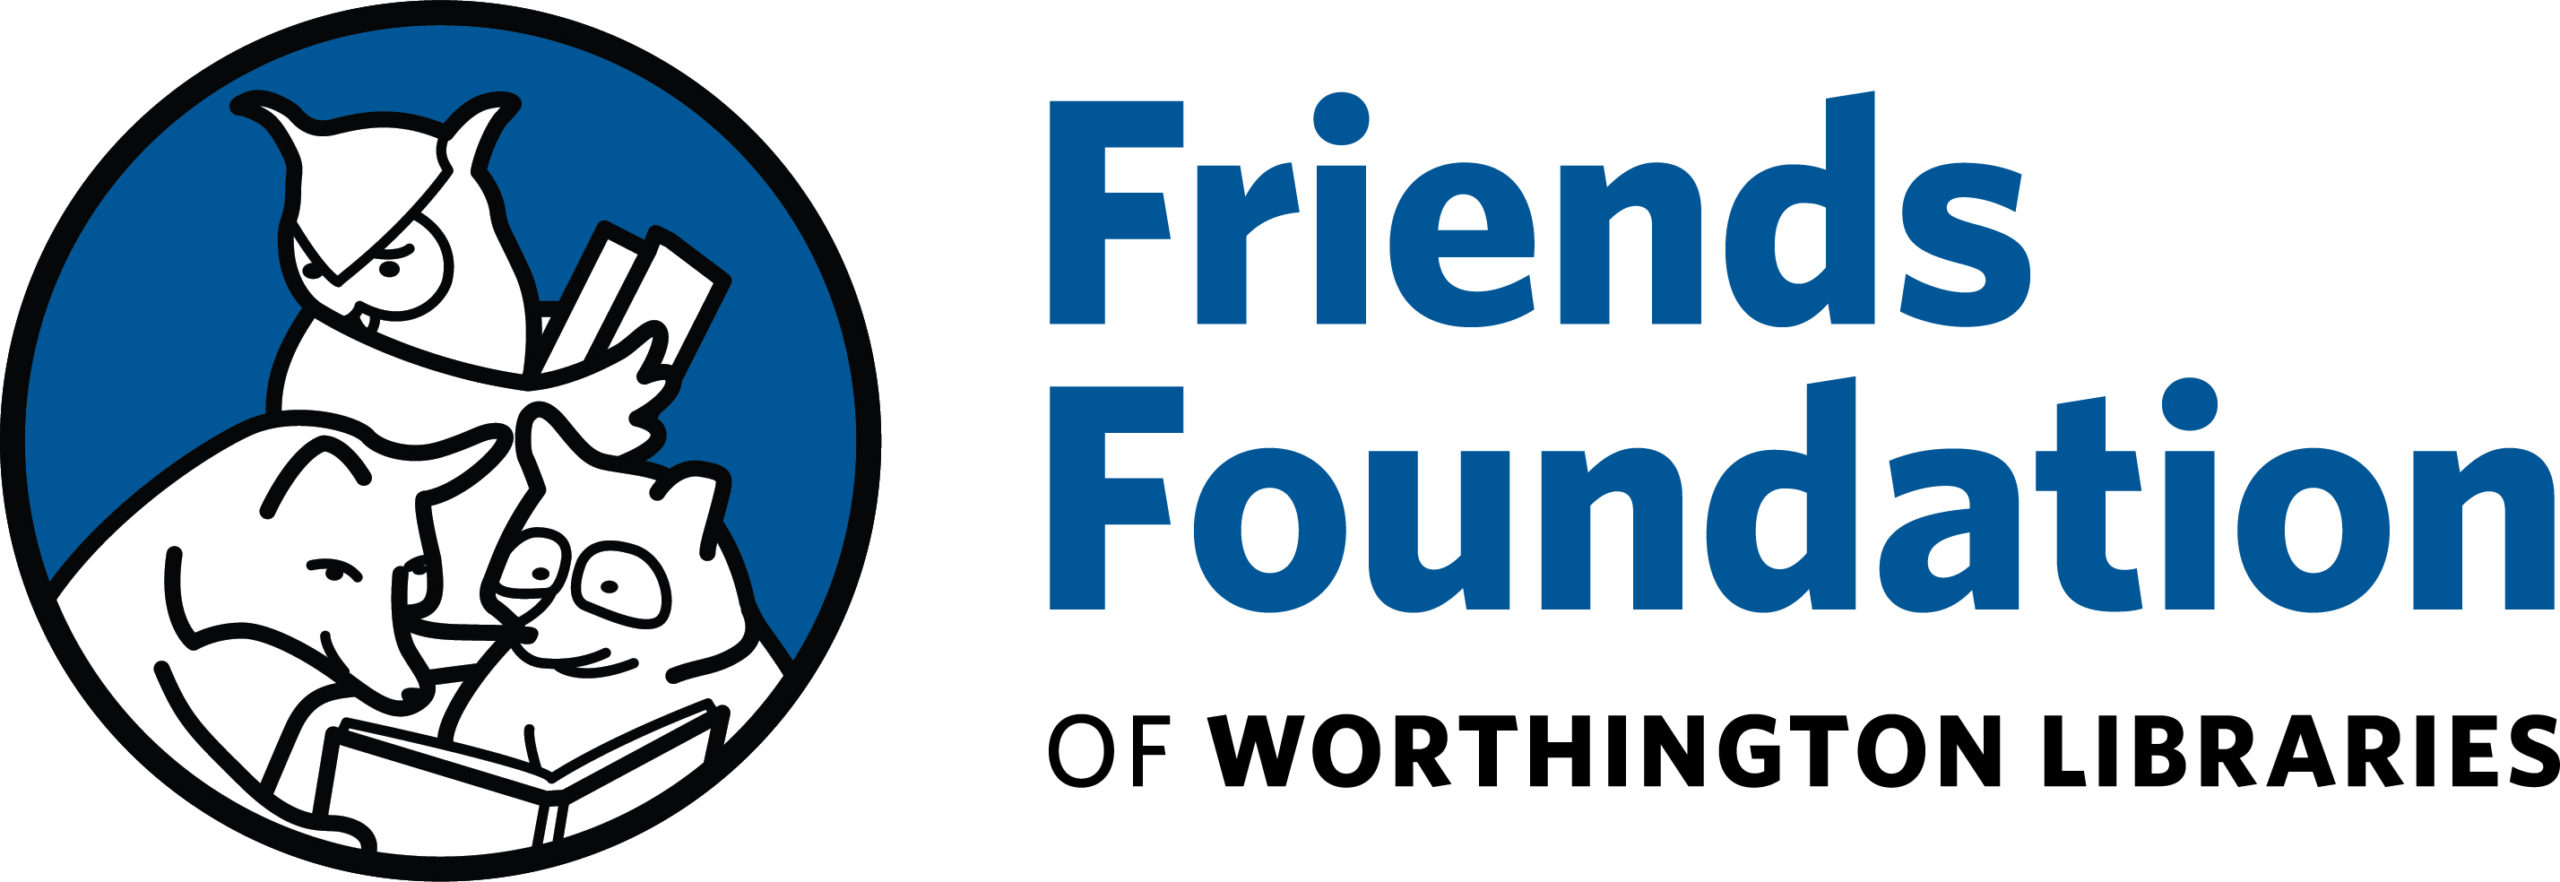 Friends Foundation of Worthington Libraries logo